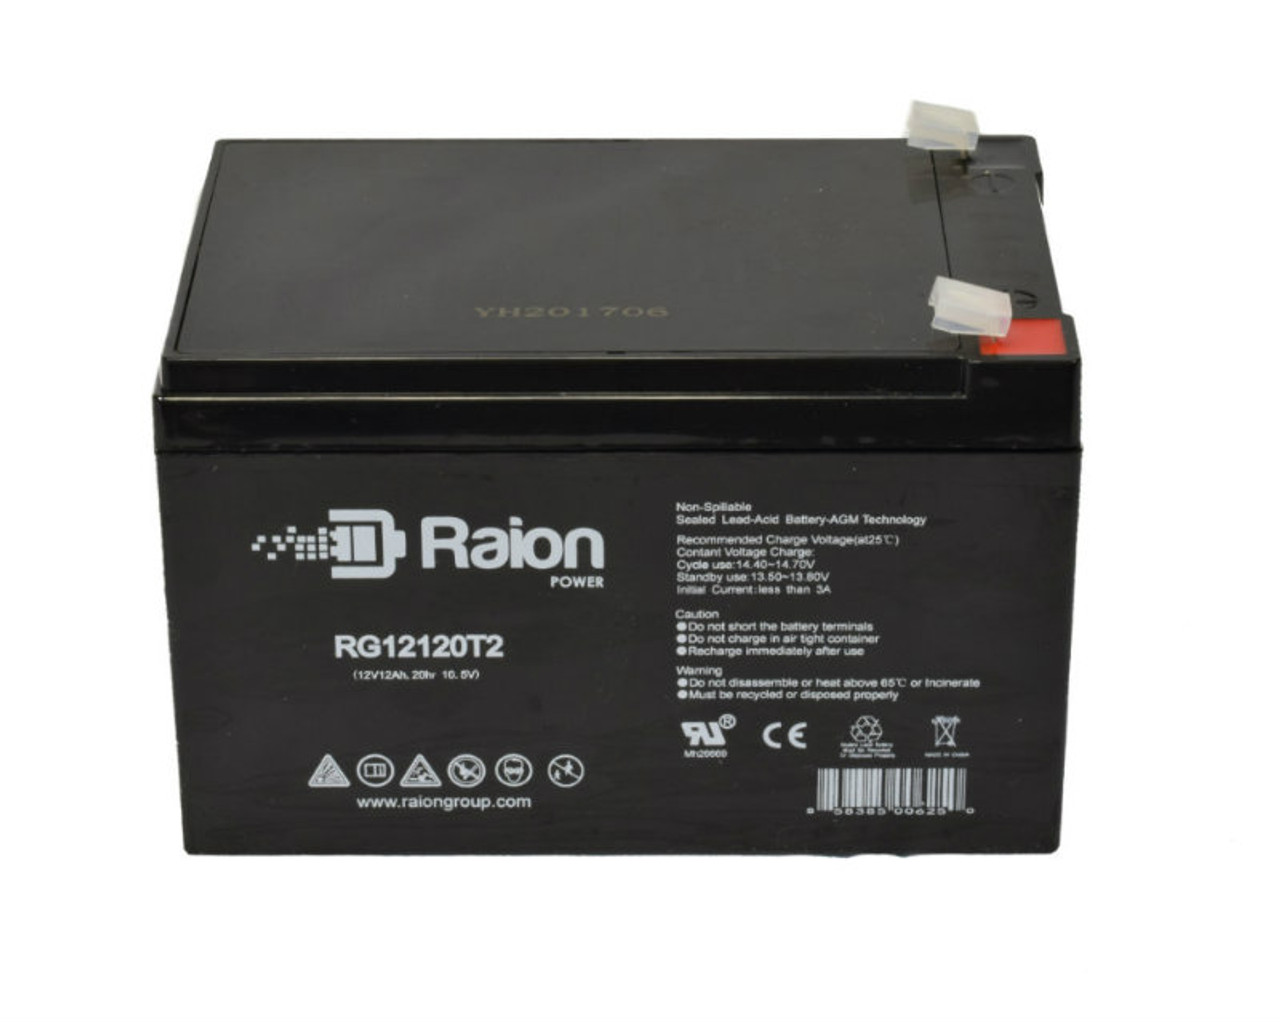 Raion Power RG12120T2 SLA Battery for LashOut Bicycle